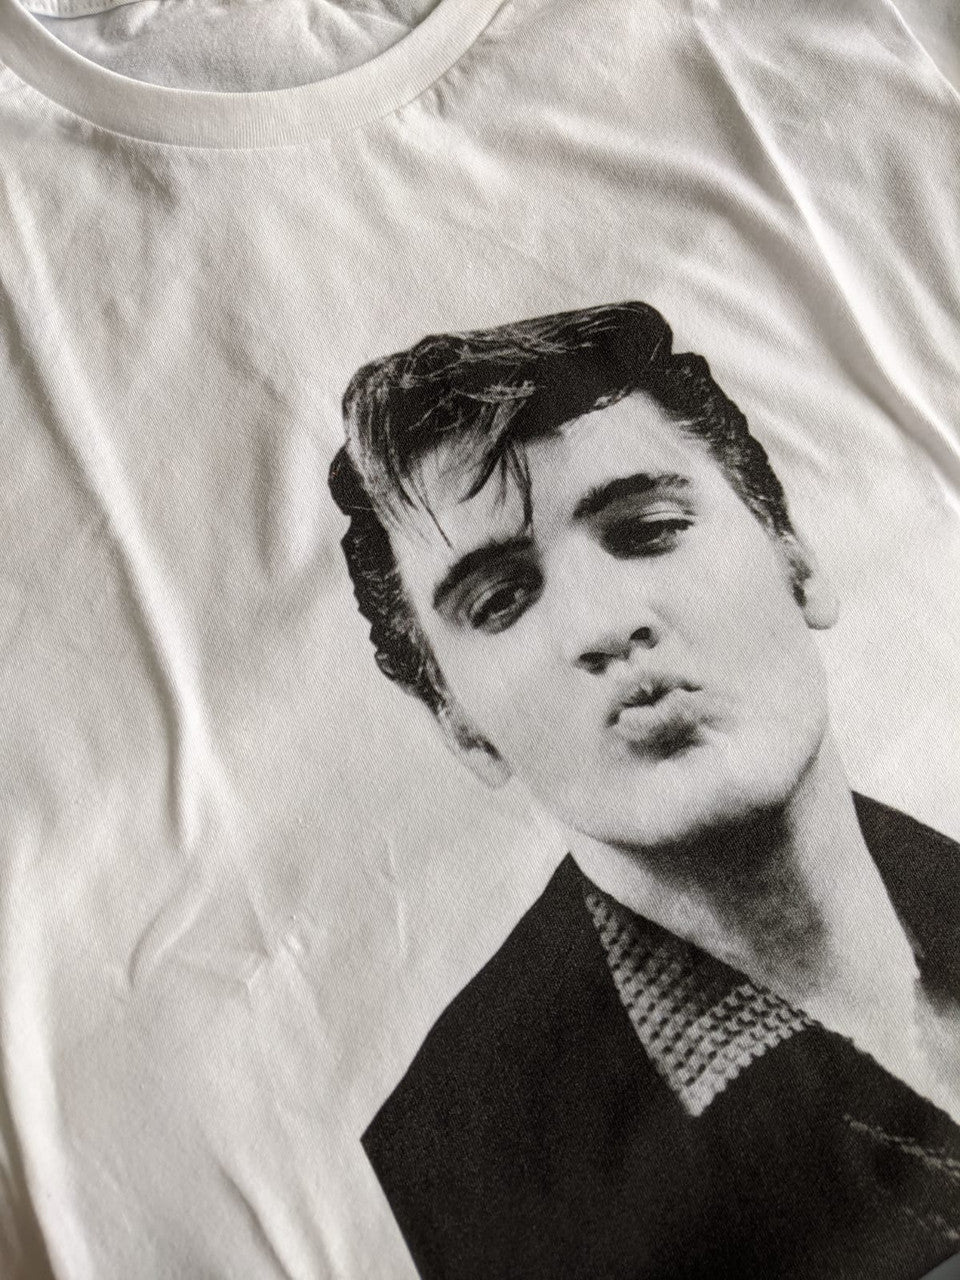 Elvis Pout  KiSS T-Shirt -Presley - The King - Rock N Roll - Jailhouse Rock